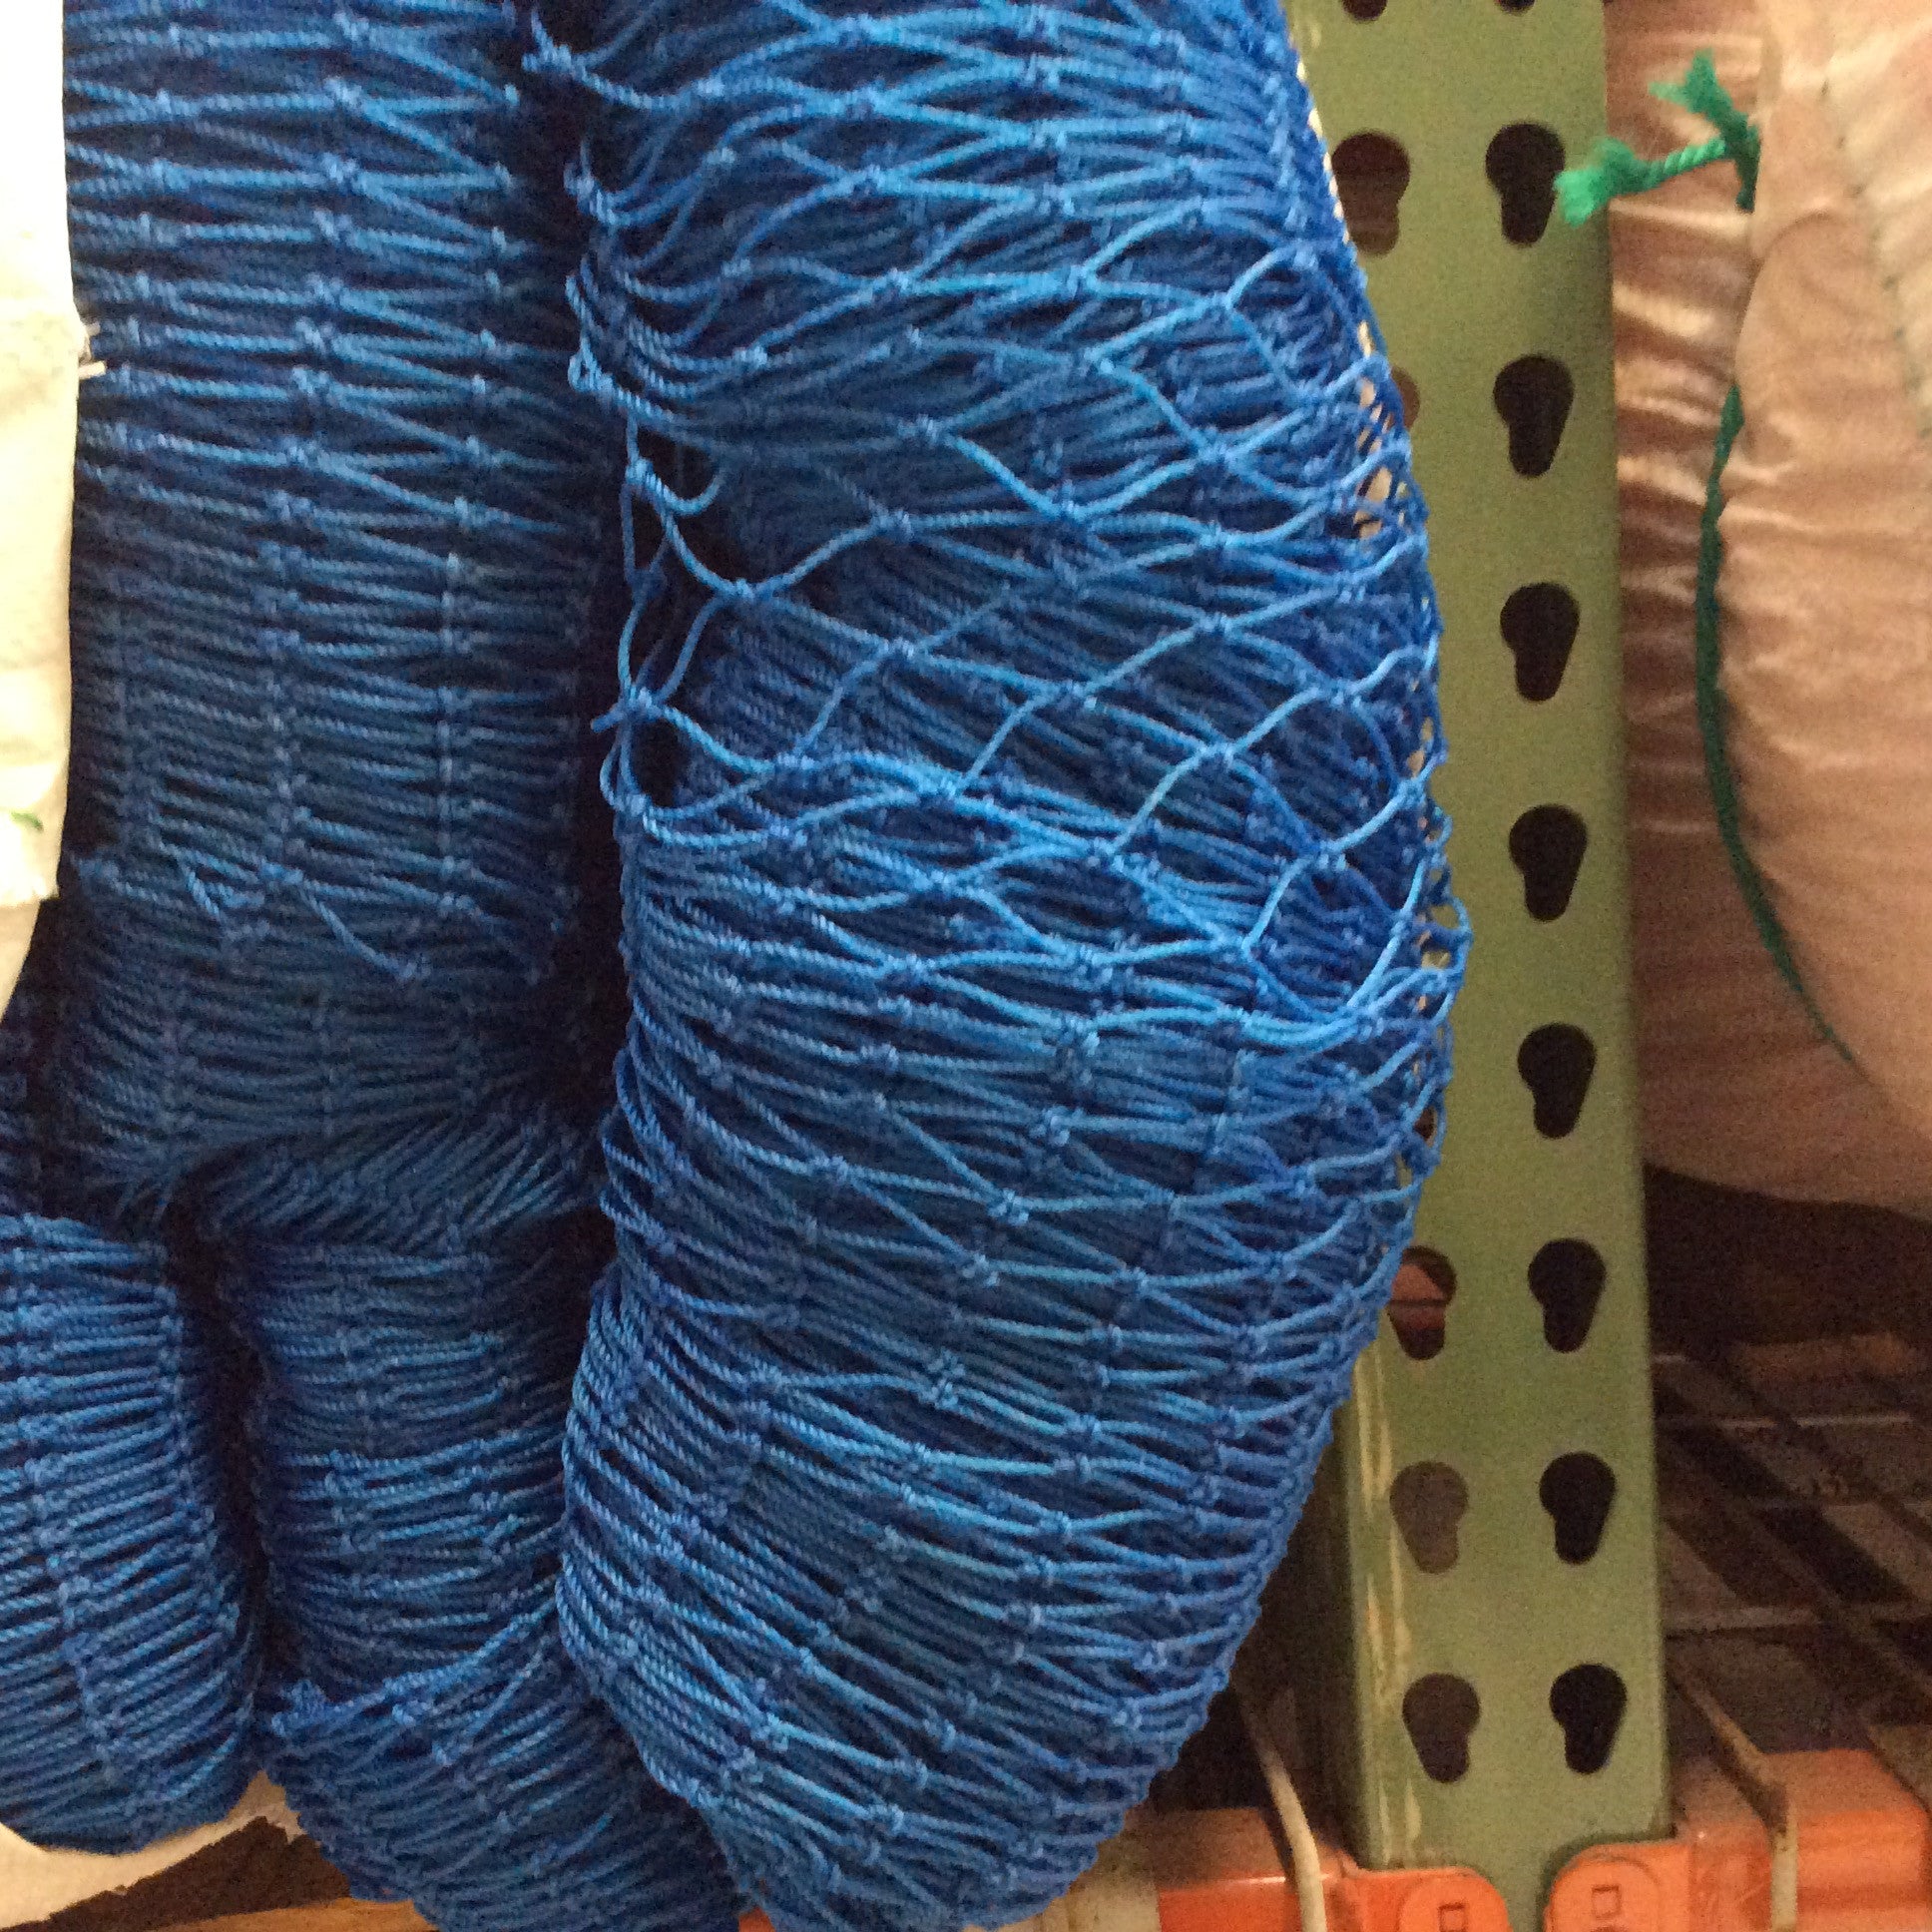 Nylon Twisted Netting No.15 (210/36)x200mdx200lbs – Lee Fisher